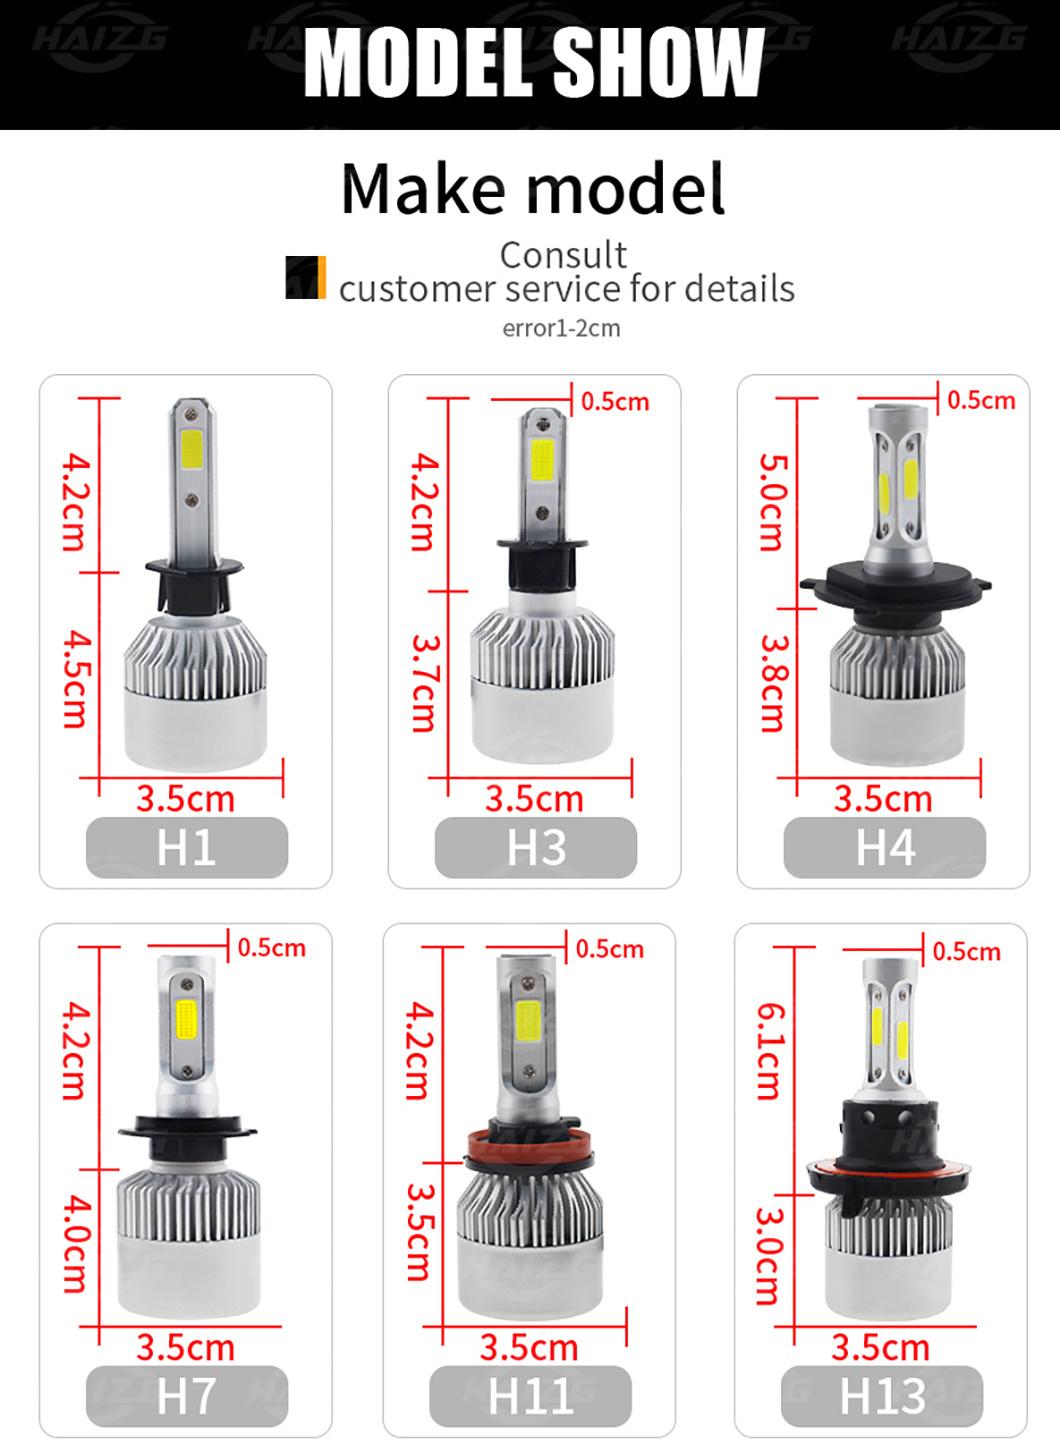 Haizg 9012/9005 Super Auto LED Light with Wholesale Price Light